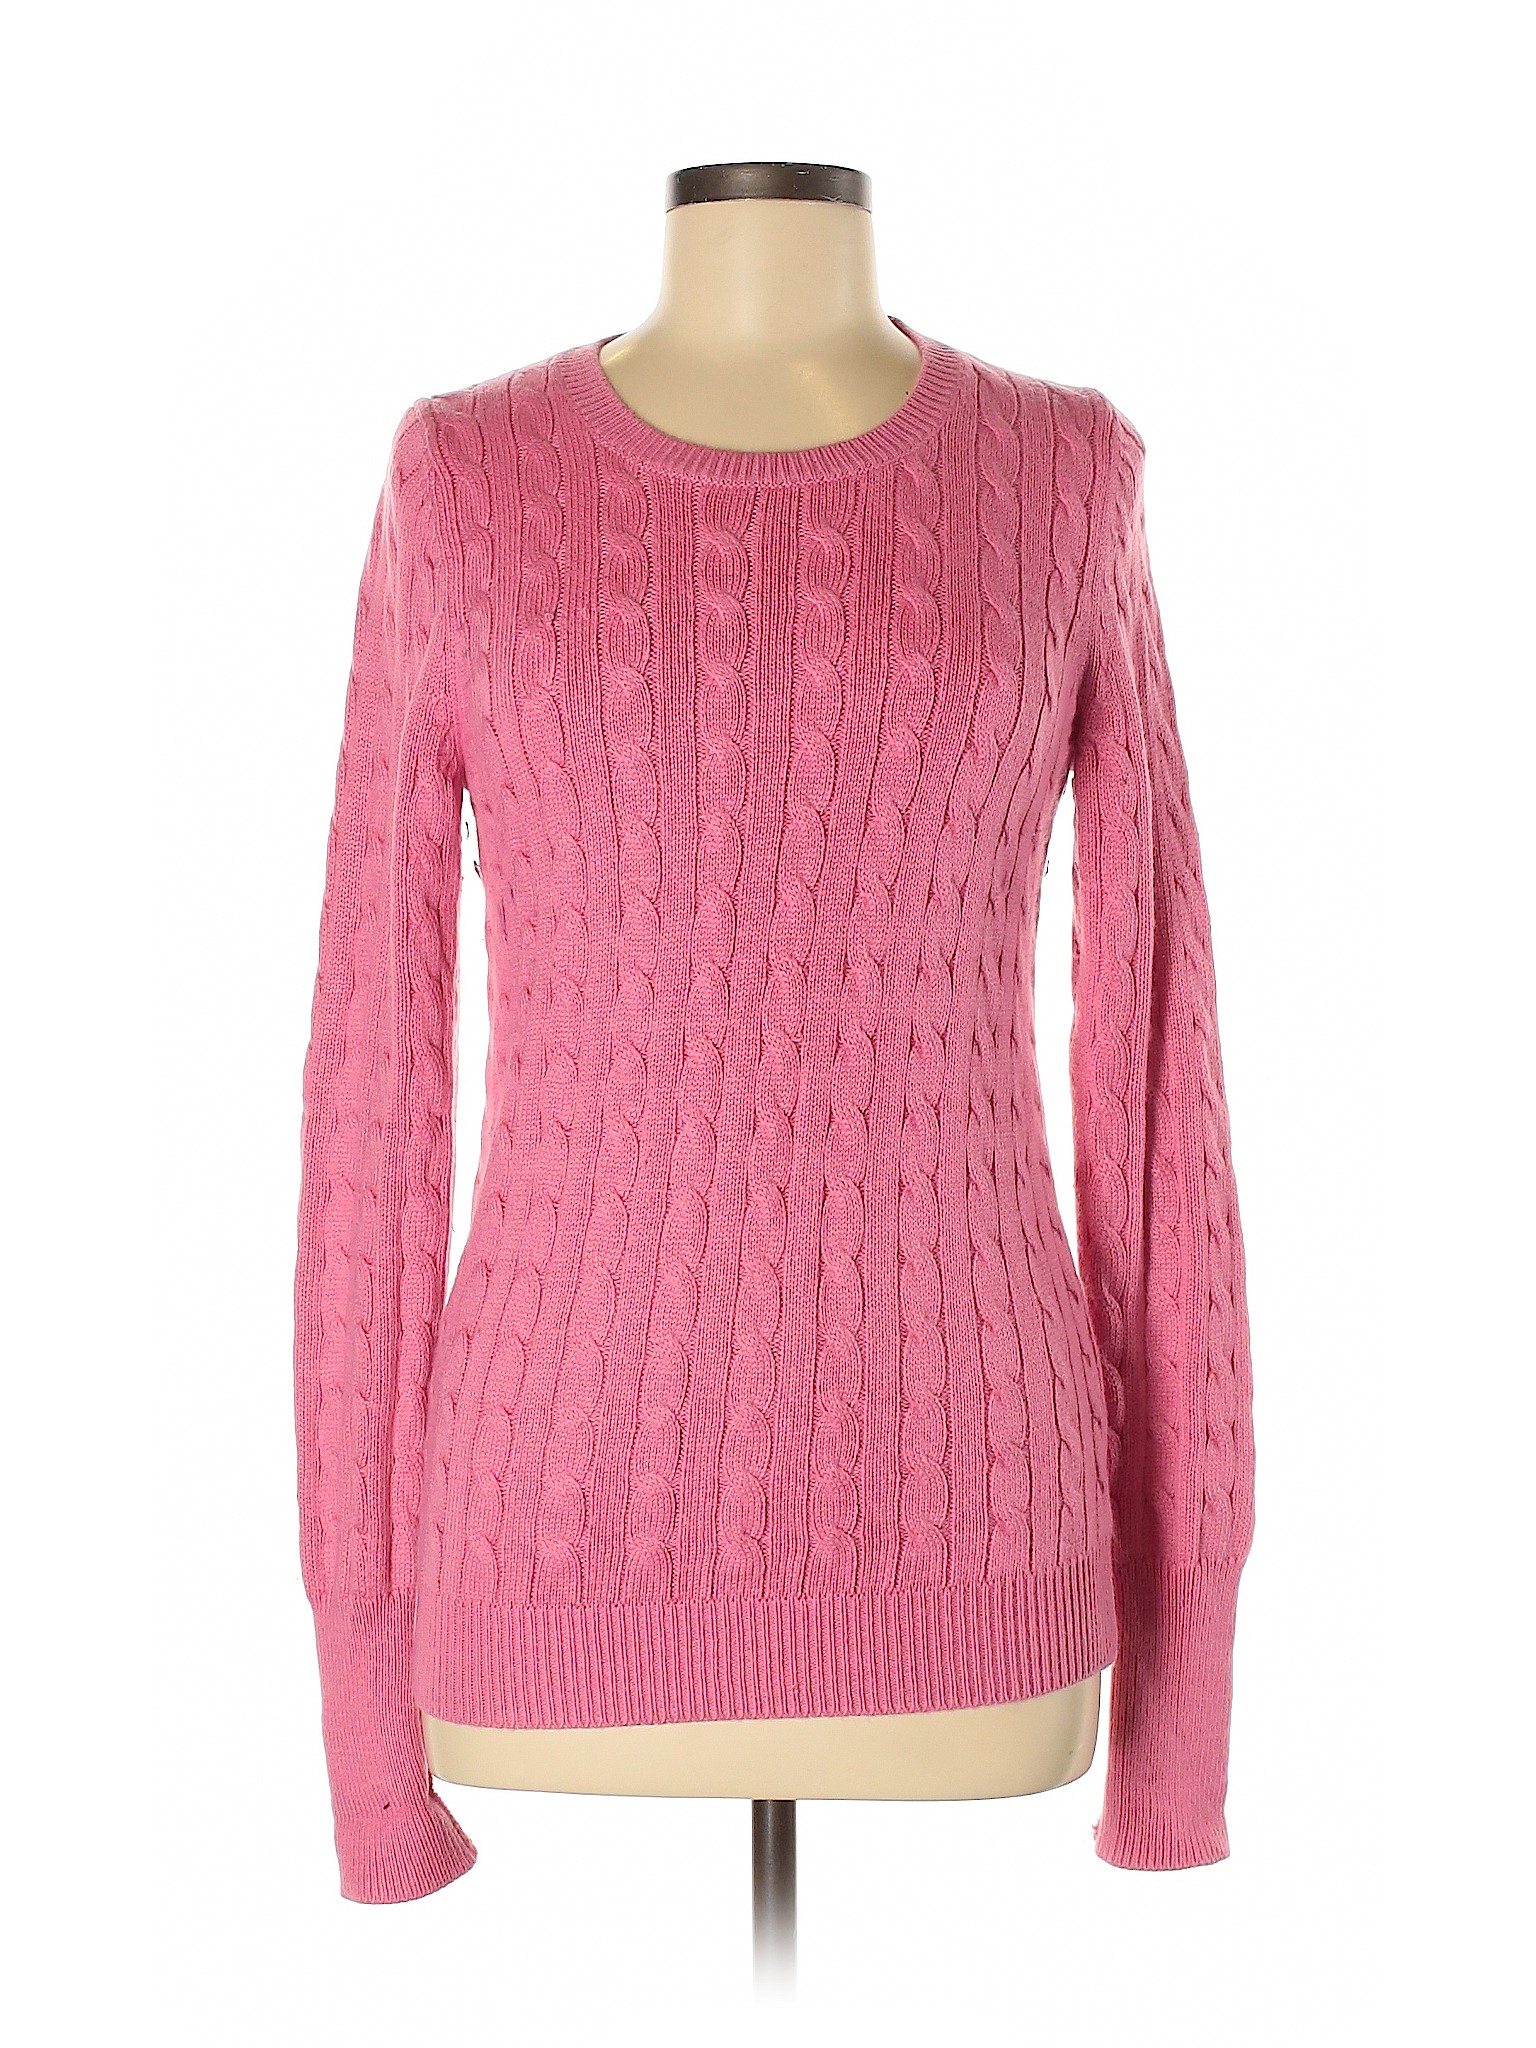 Gap Women Pink Pullover Sweater M | eBay